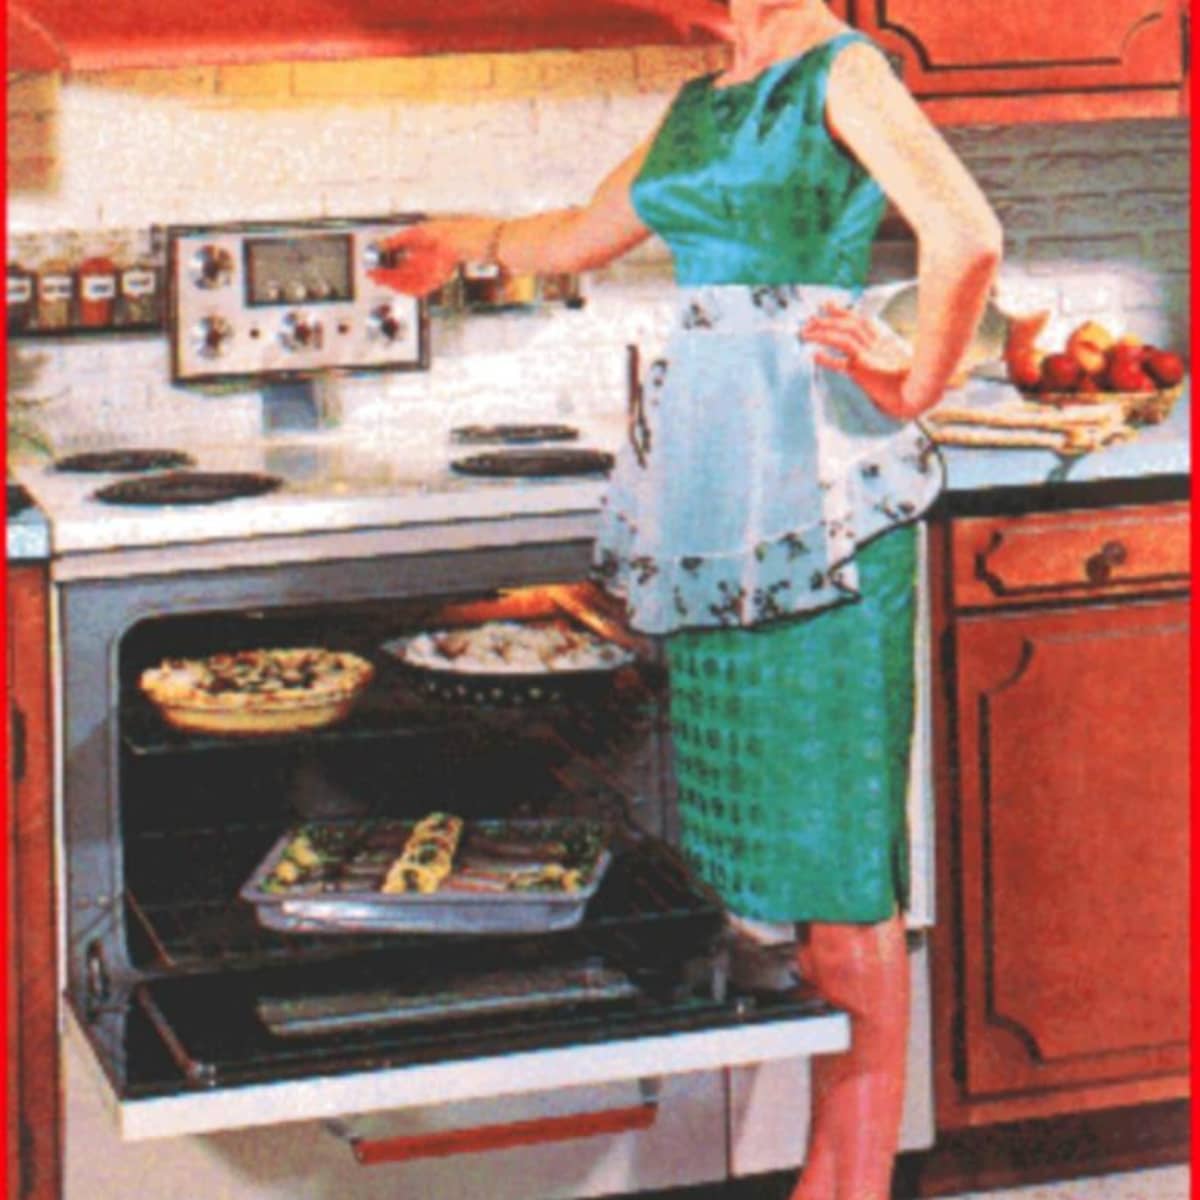 1950 s housewife